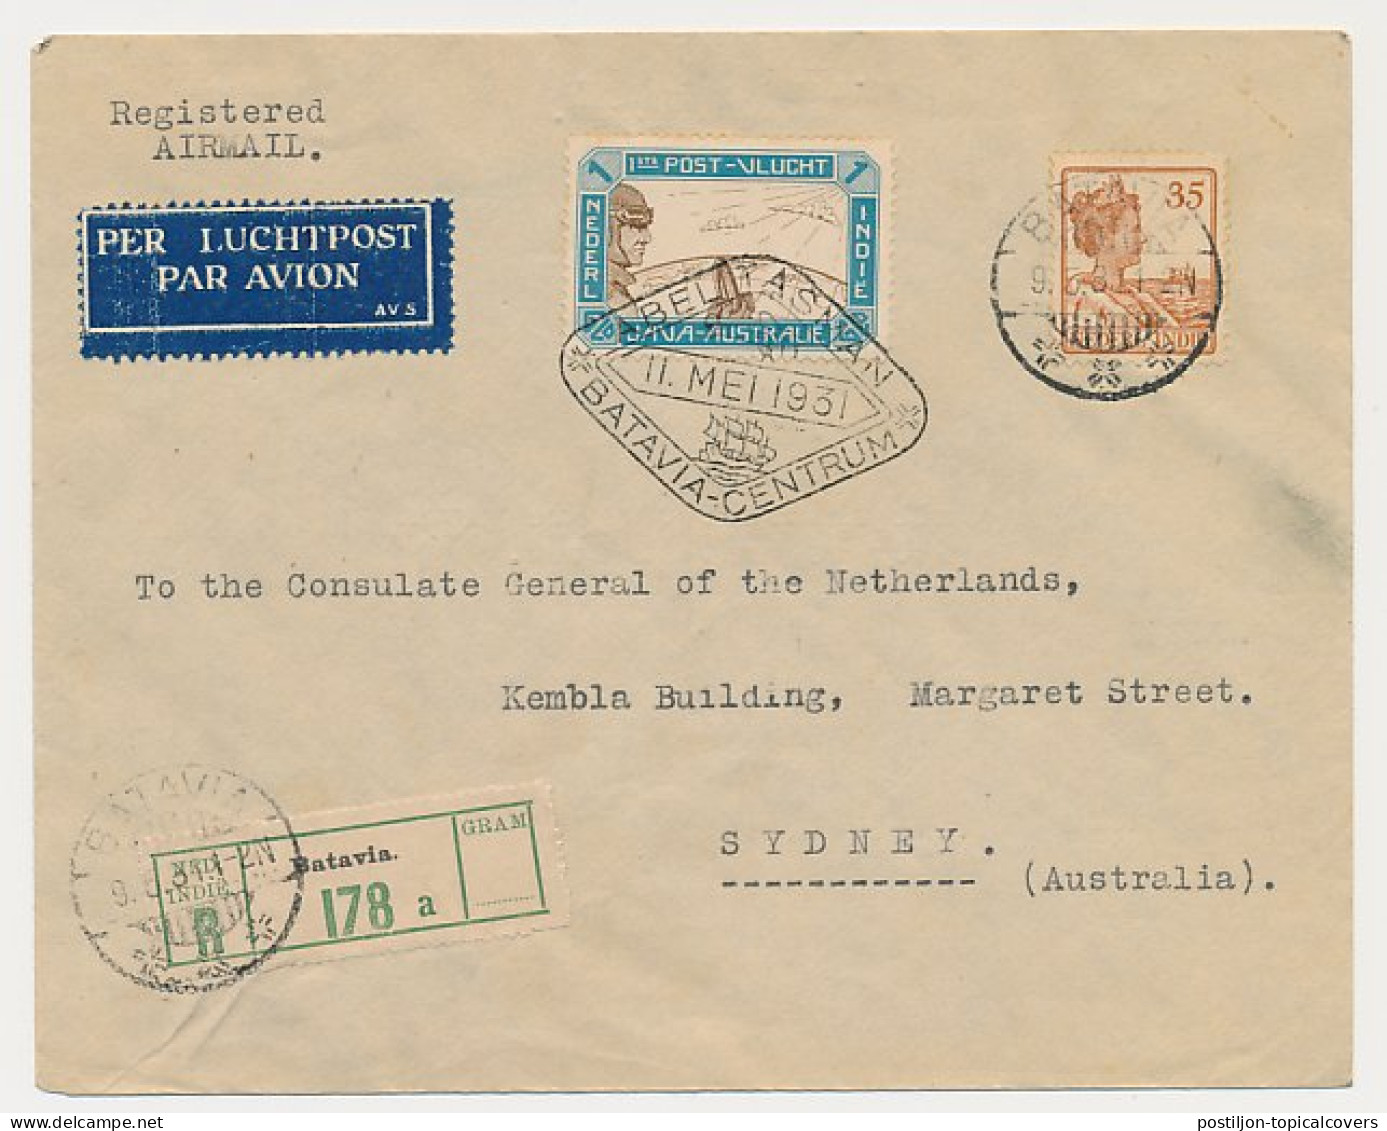 VH C 90 I E Batavia Ned. Indie - Sydney Australie 1931    - Unclassified